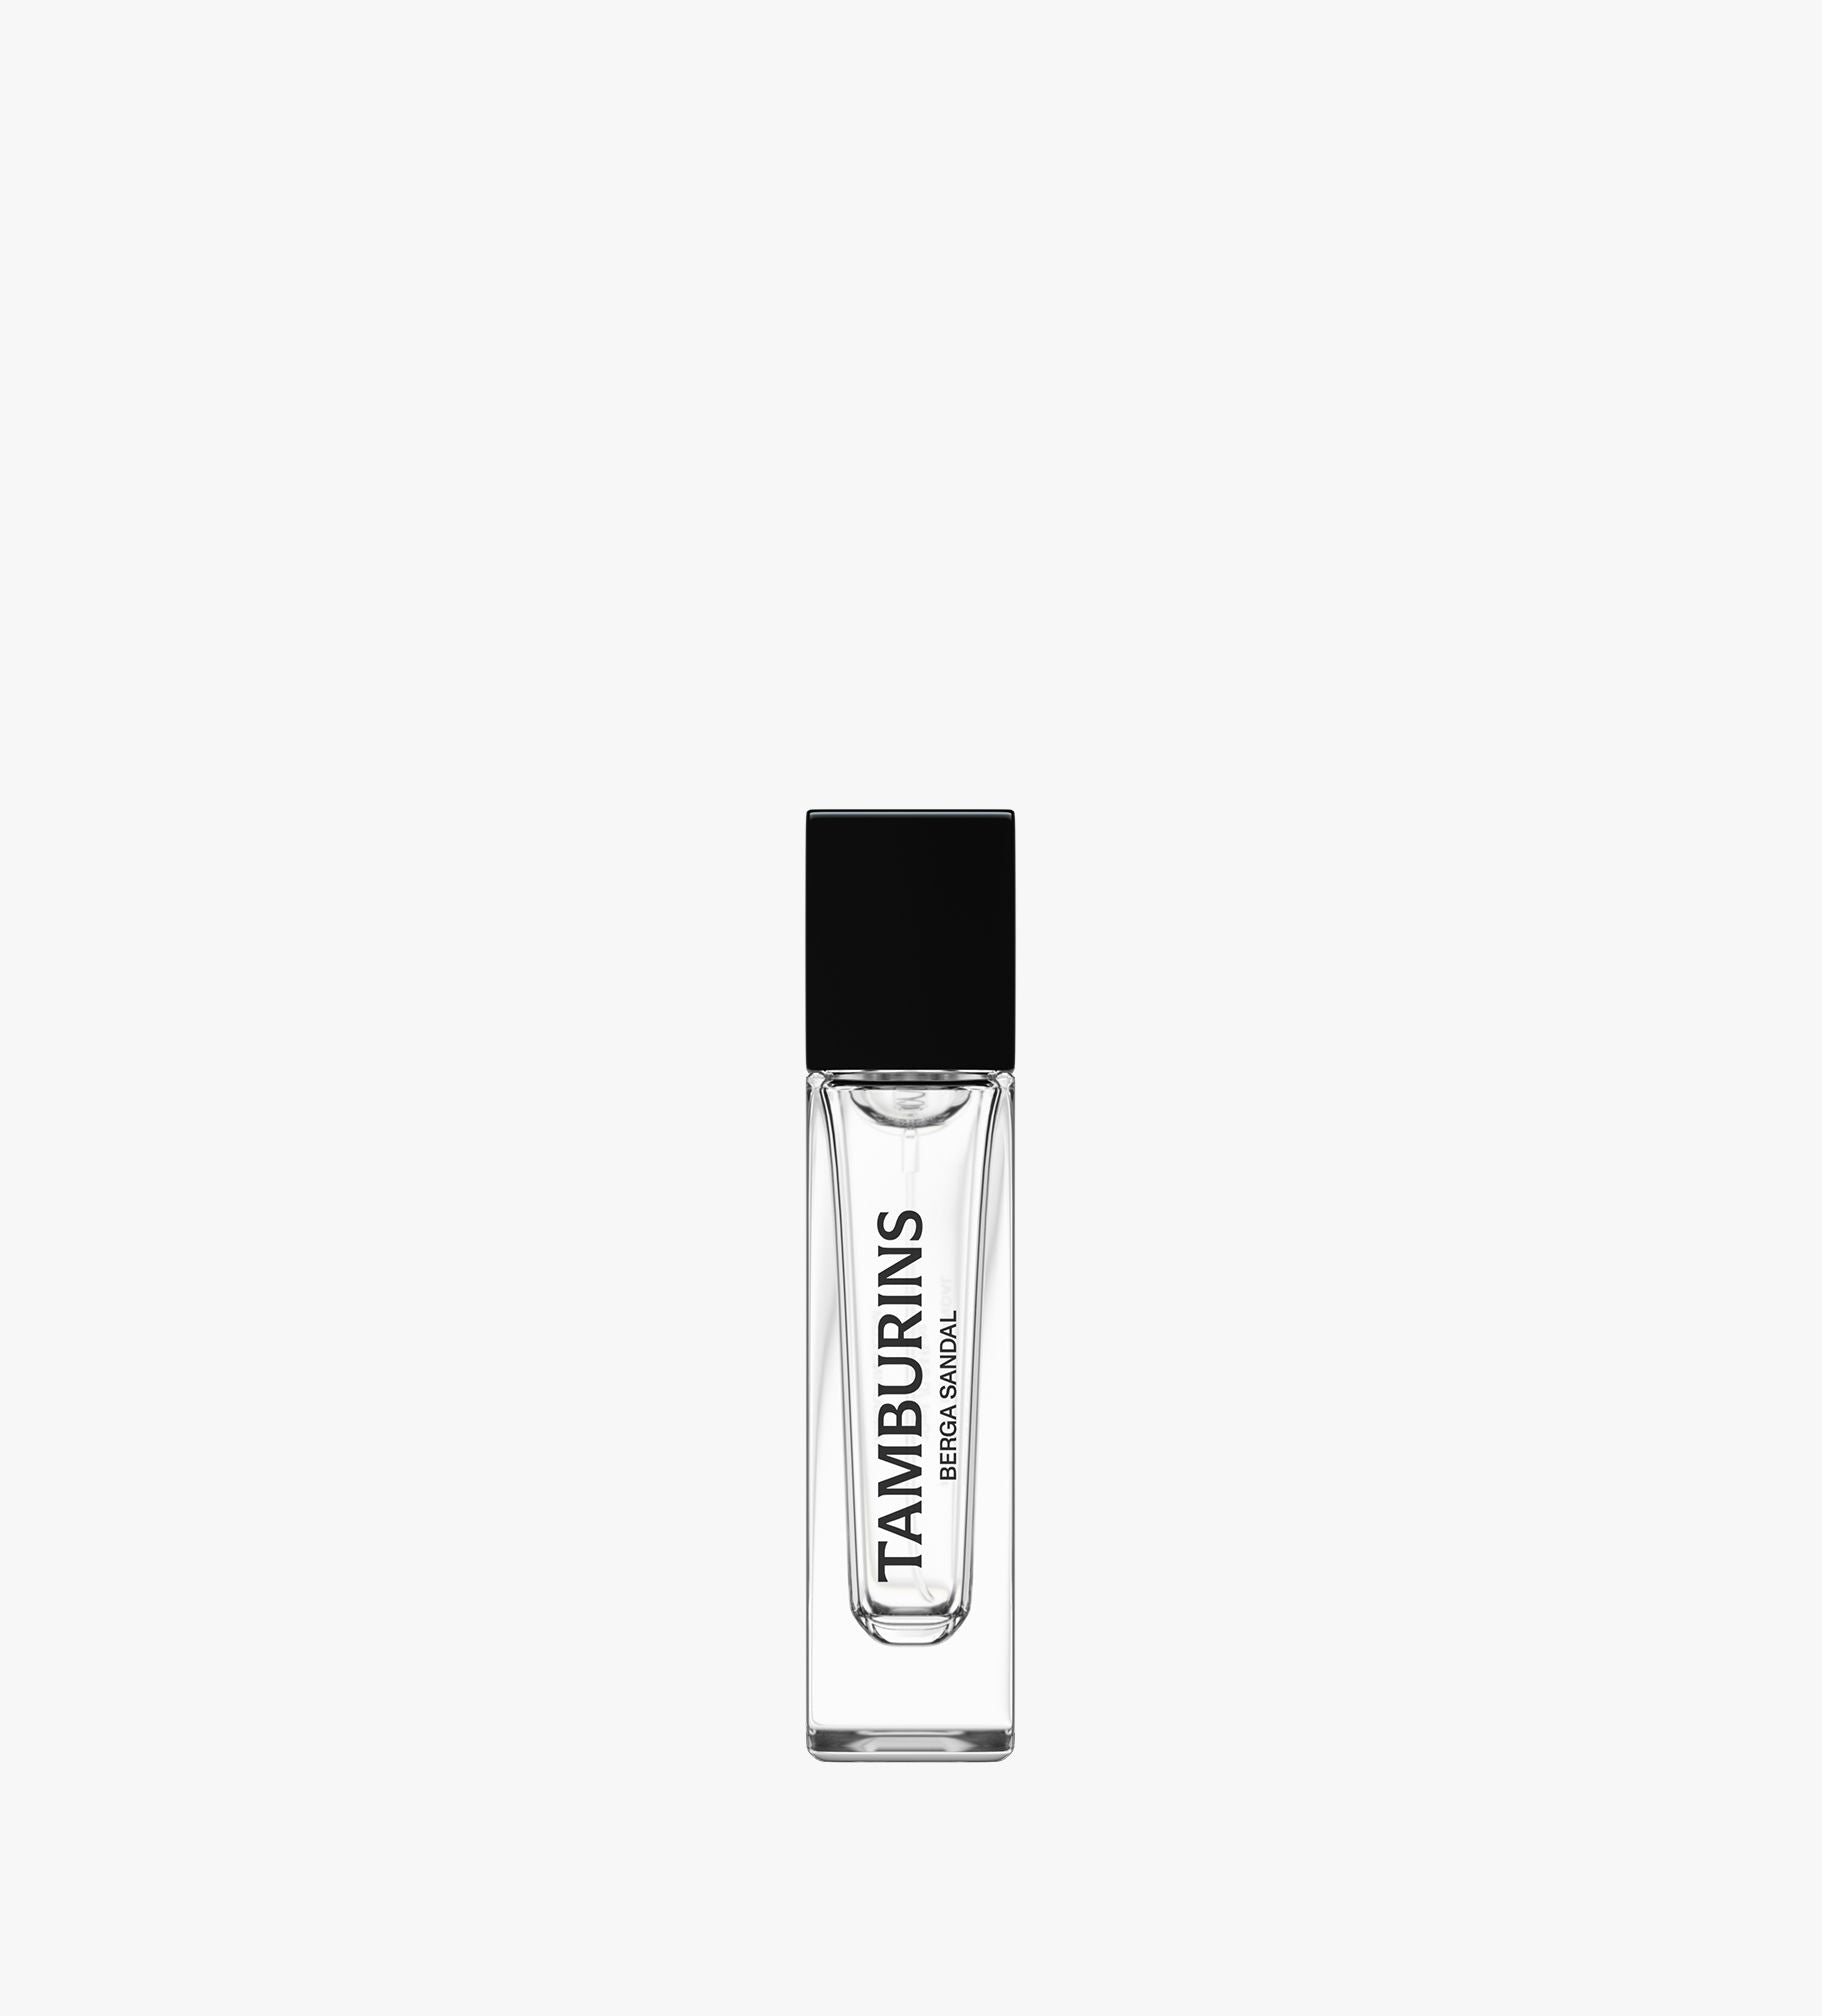 Tamburins Perfume #BERGA SANDAL 11ml / 50ml - DODOSKIN